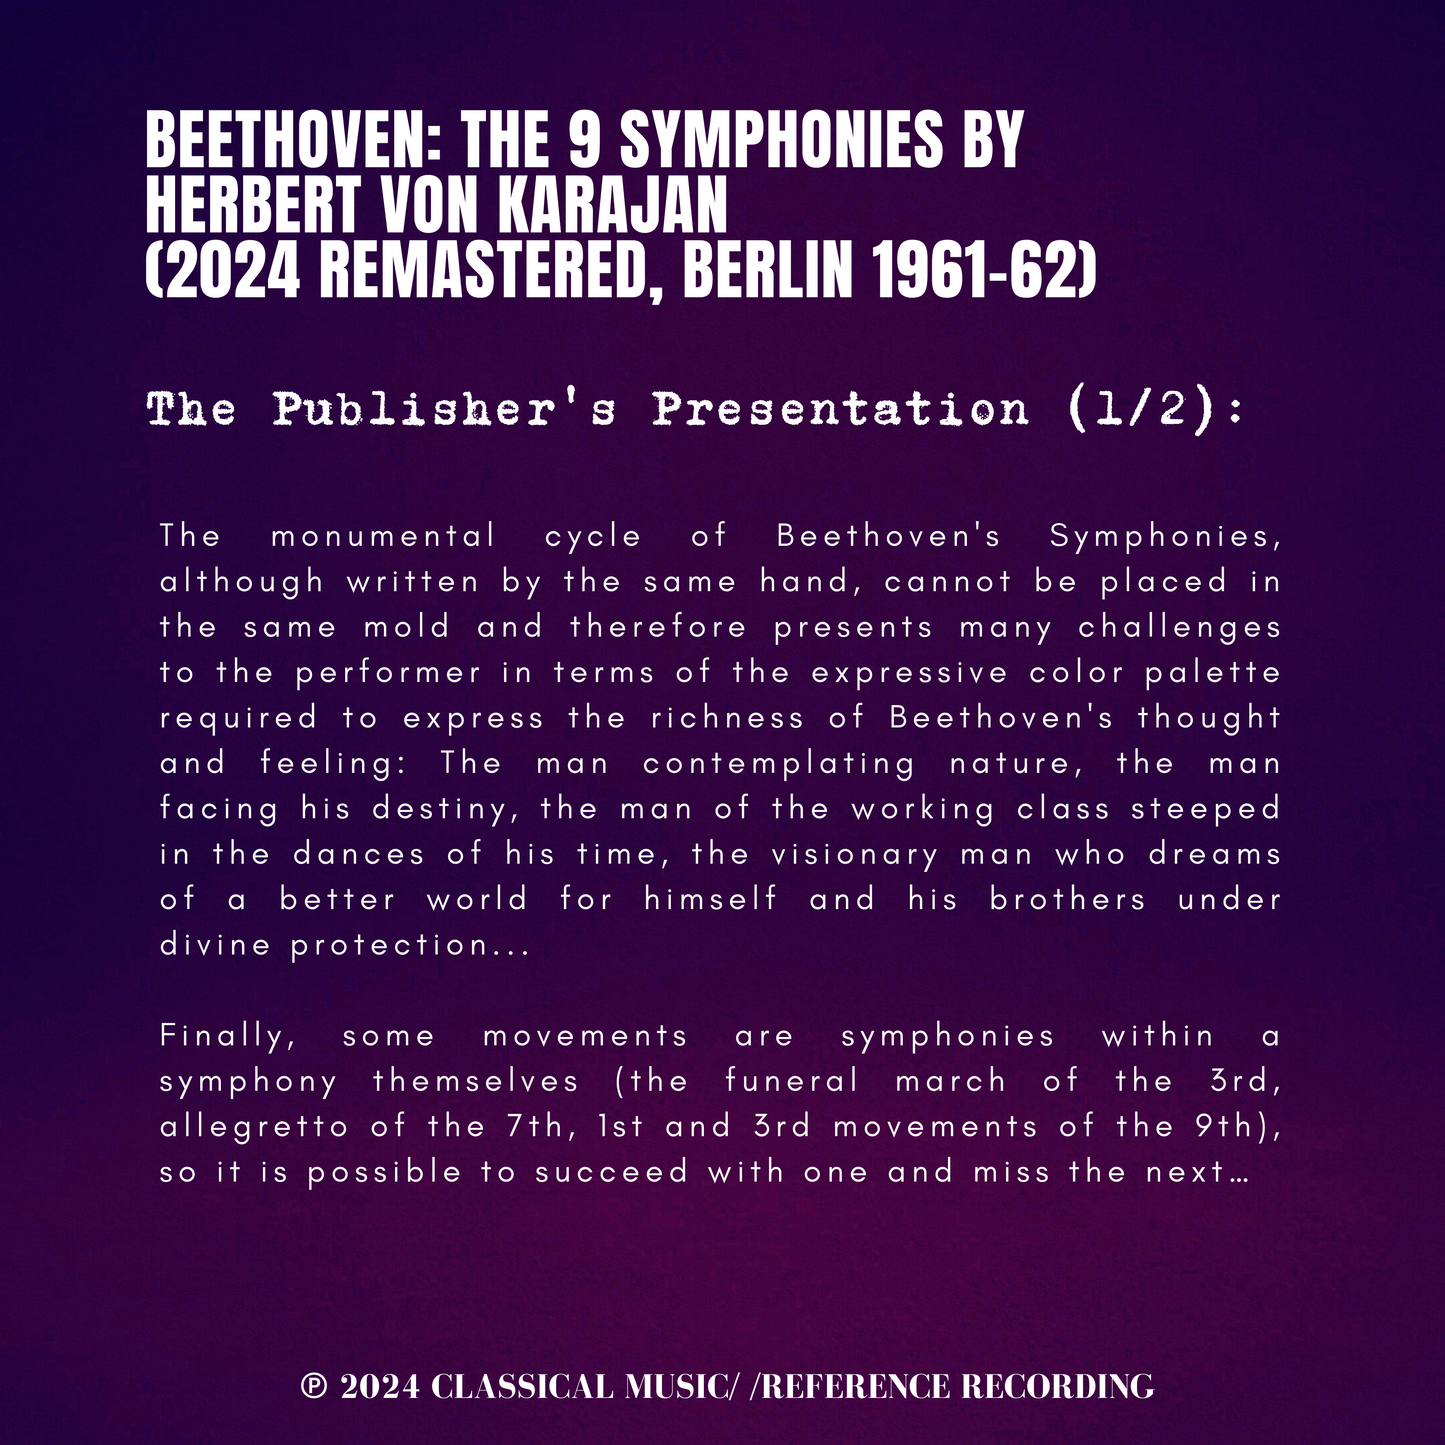 Beethoven_The 9 Symphonies by Herbert von Karajan (2024 Remastered, Berlin 1961-62)